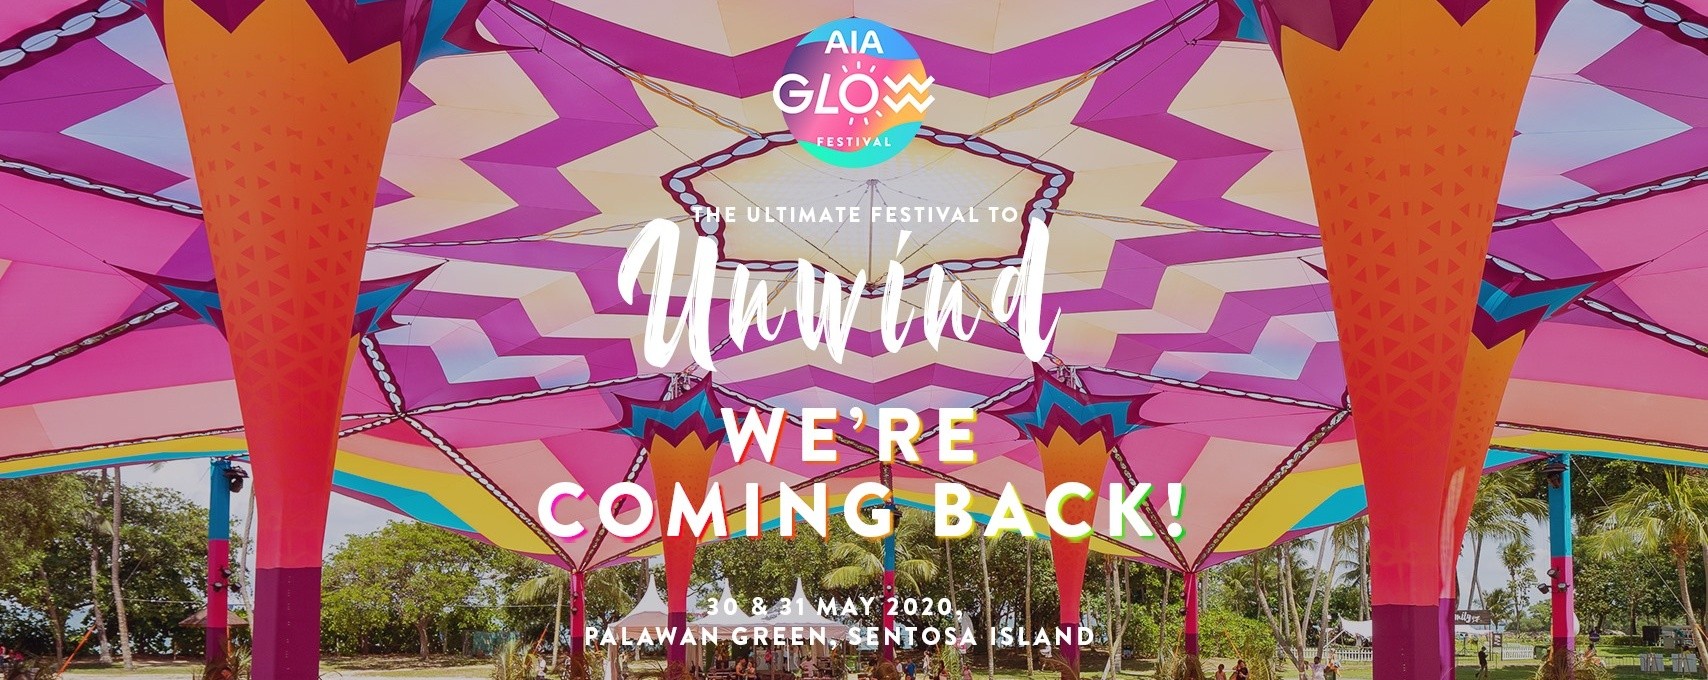 [POSTPONED] AIA Glow Festival